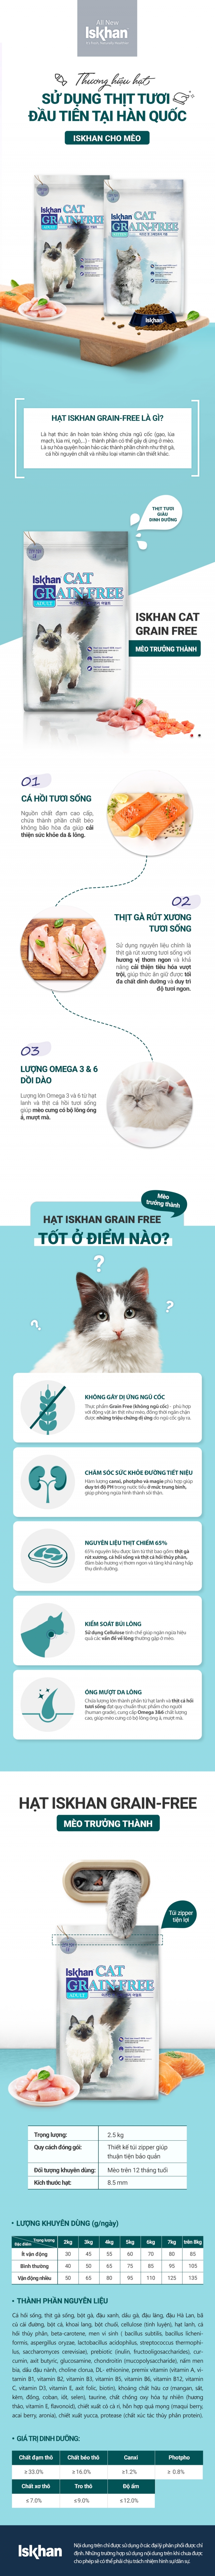 iskhan-cat-adult-redesign-1709524353.jpg